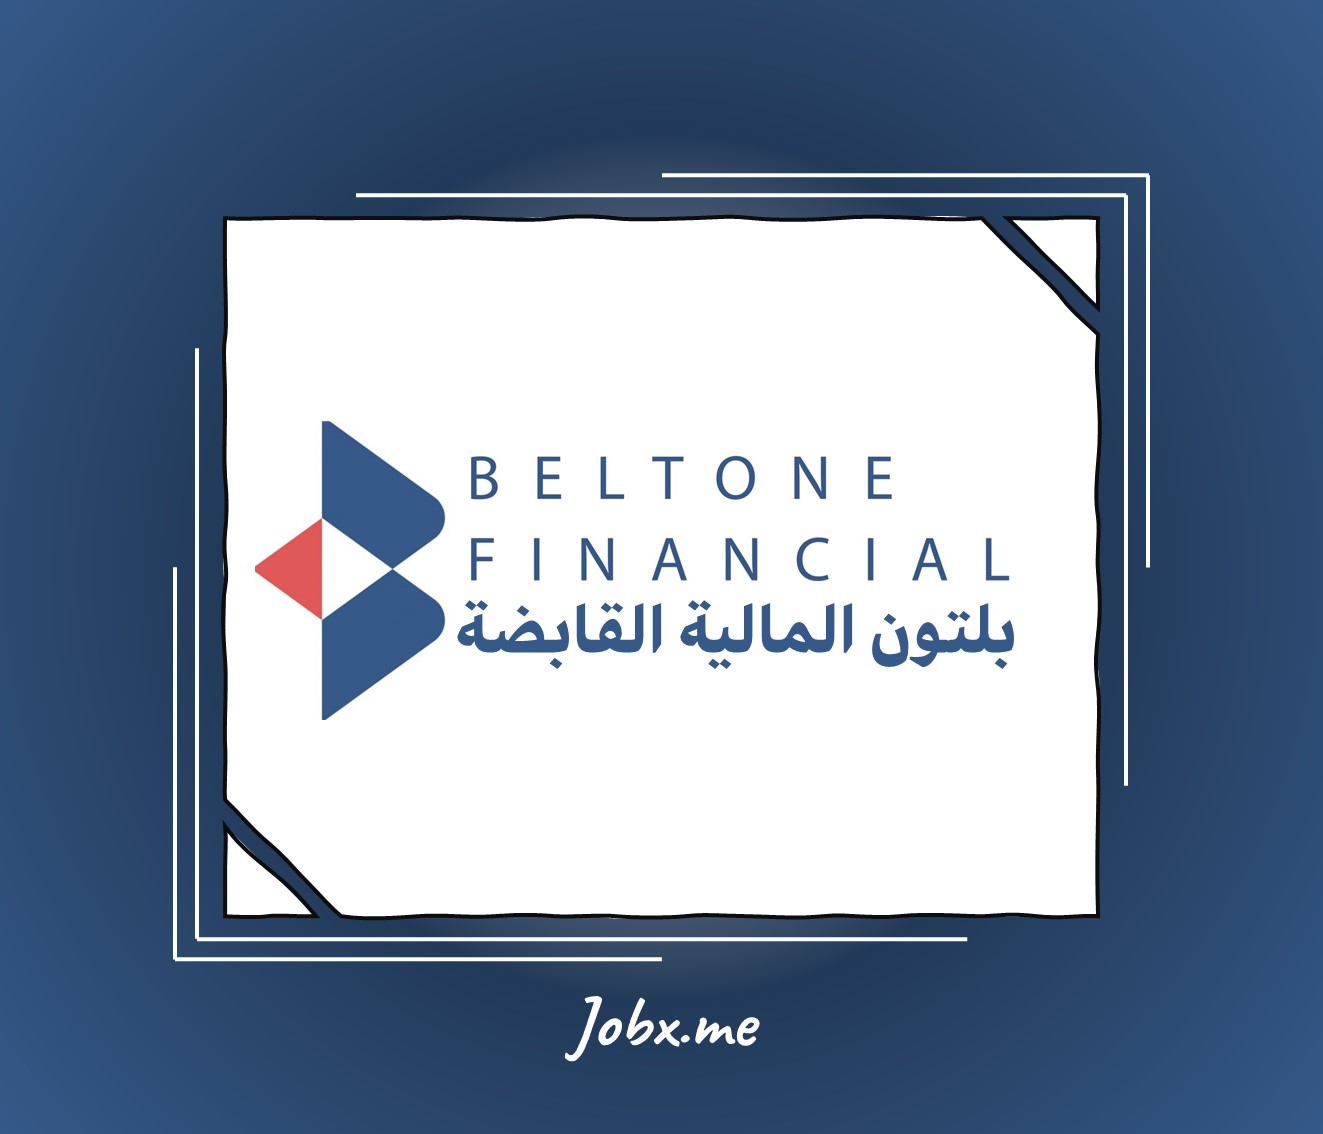 Beltone Financial Career